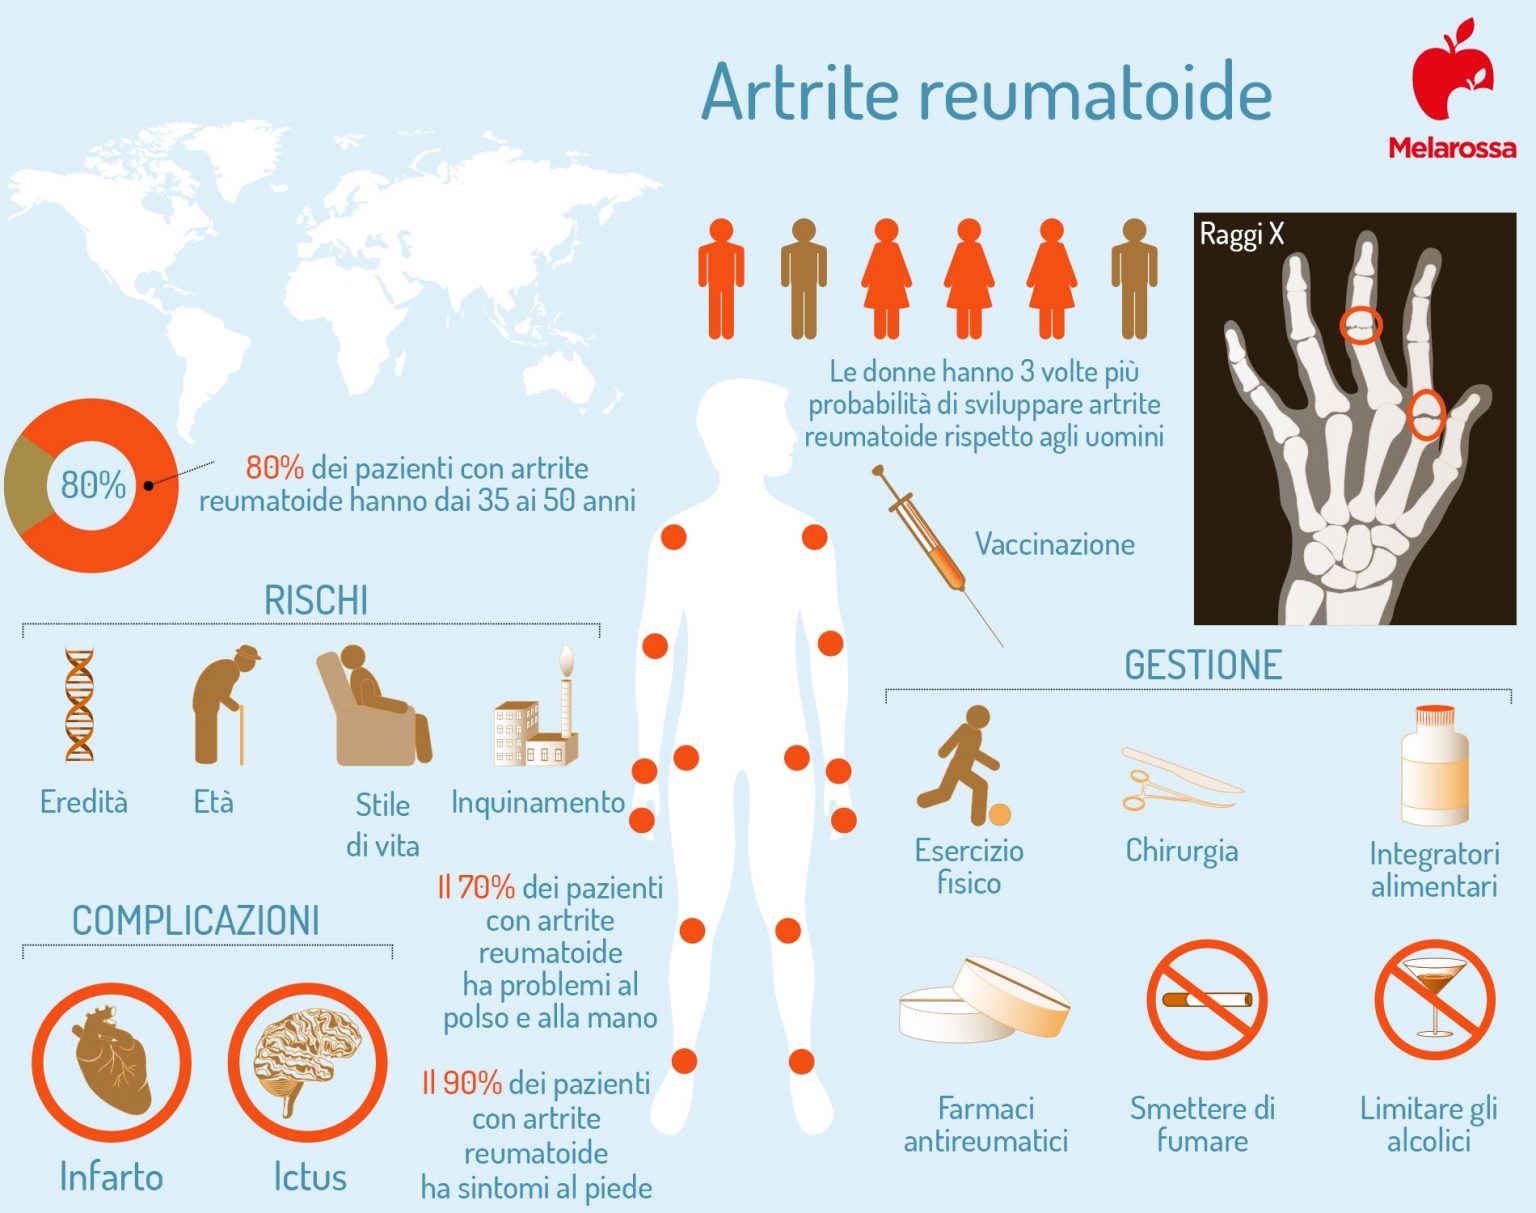 vasculite: artrite reumatoide